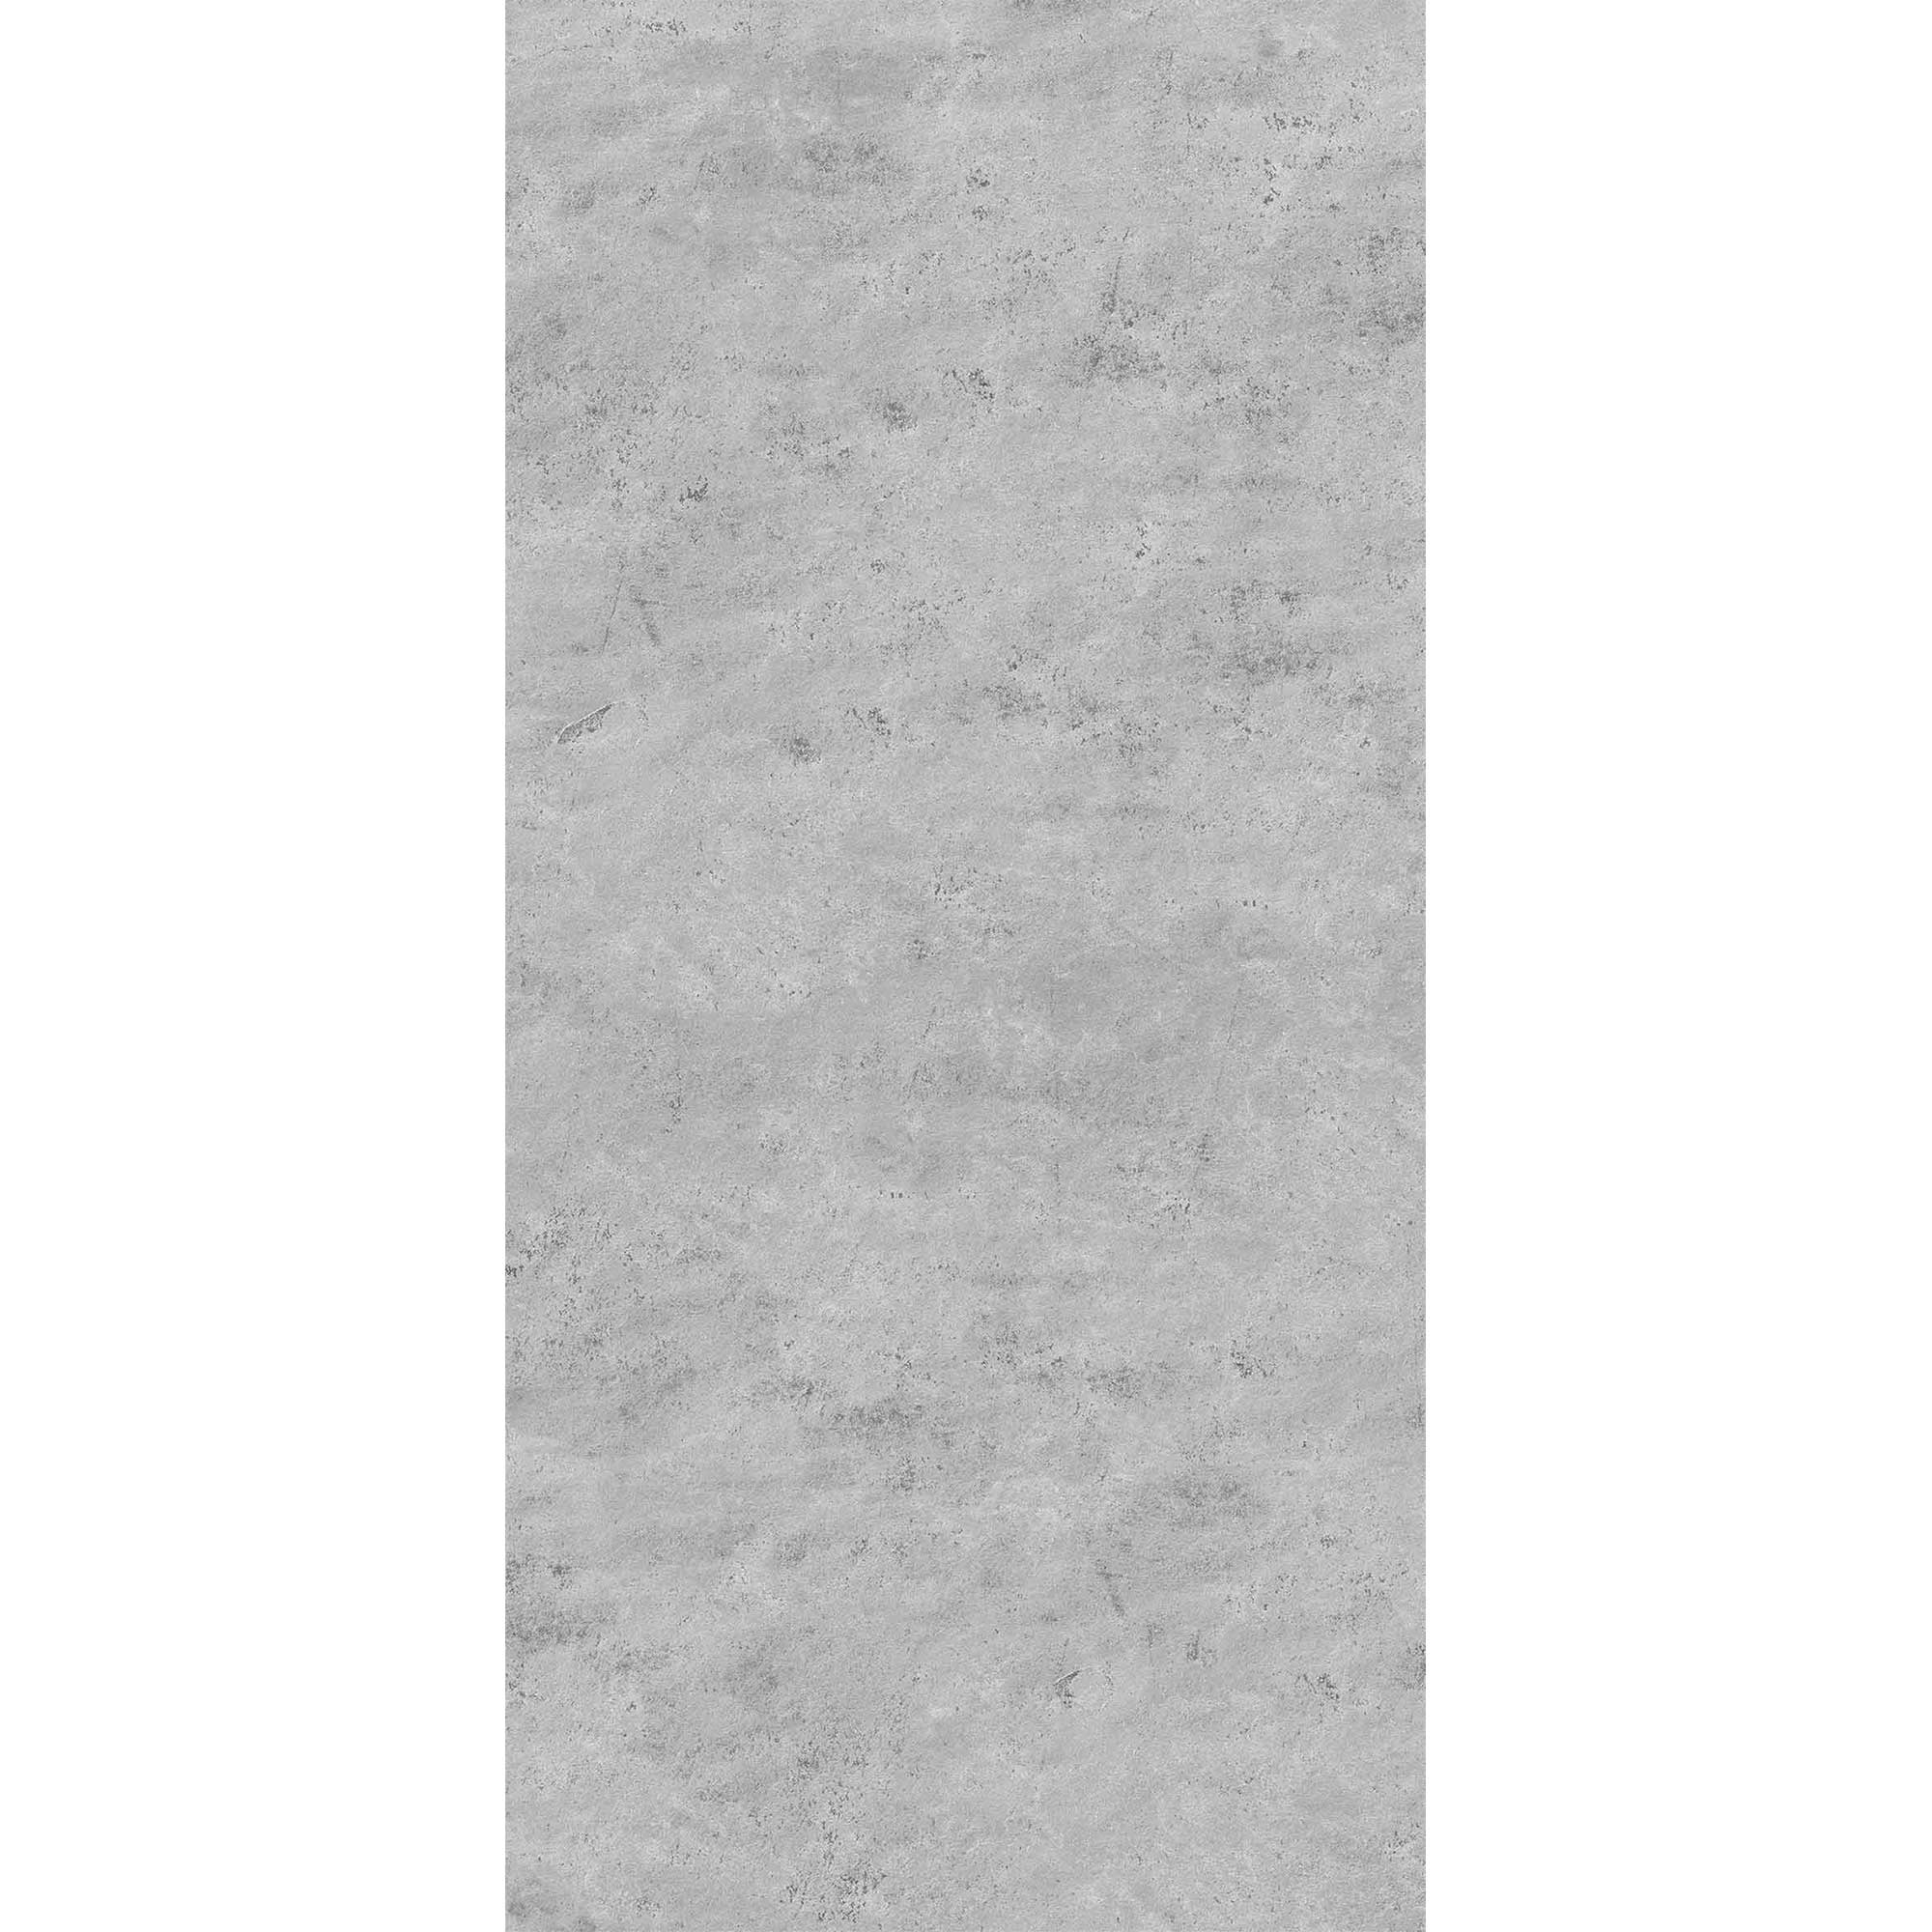 Duschrückwand Marmoroptik grau 150 x 255 cm + product picture